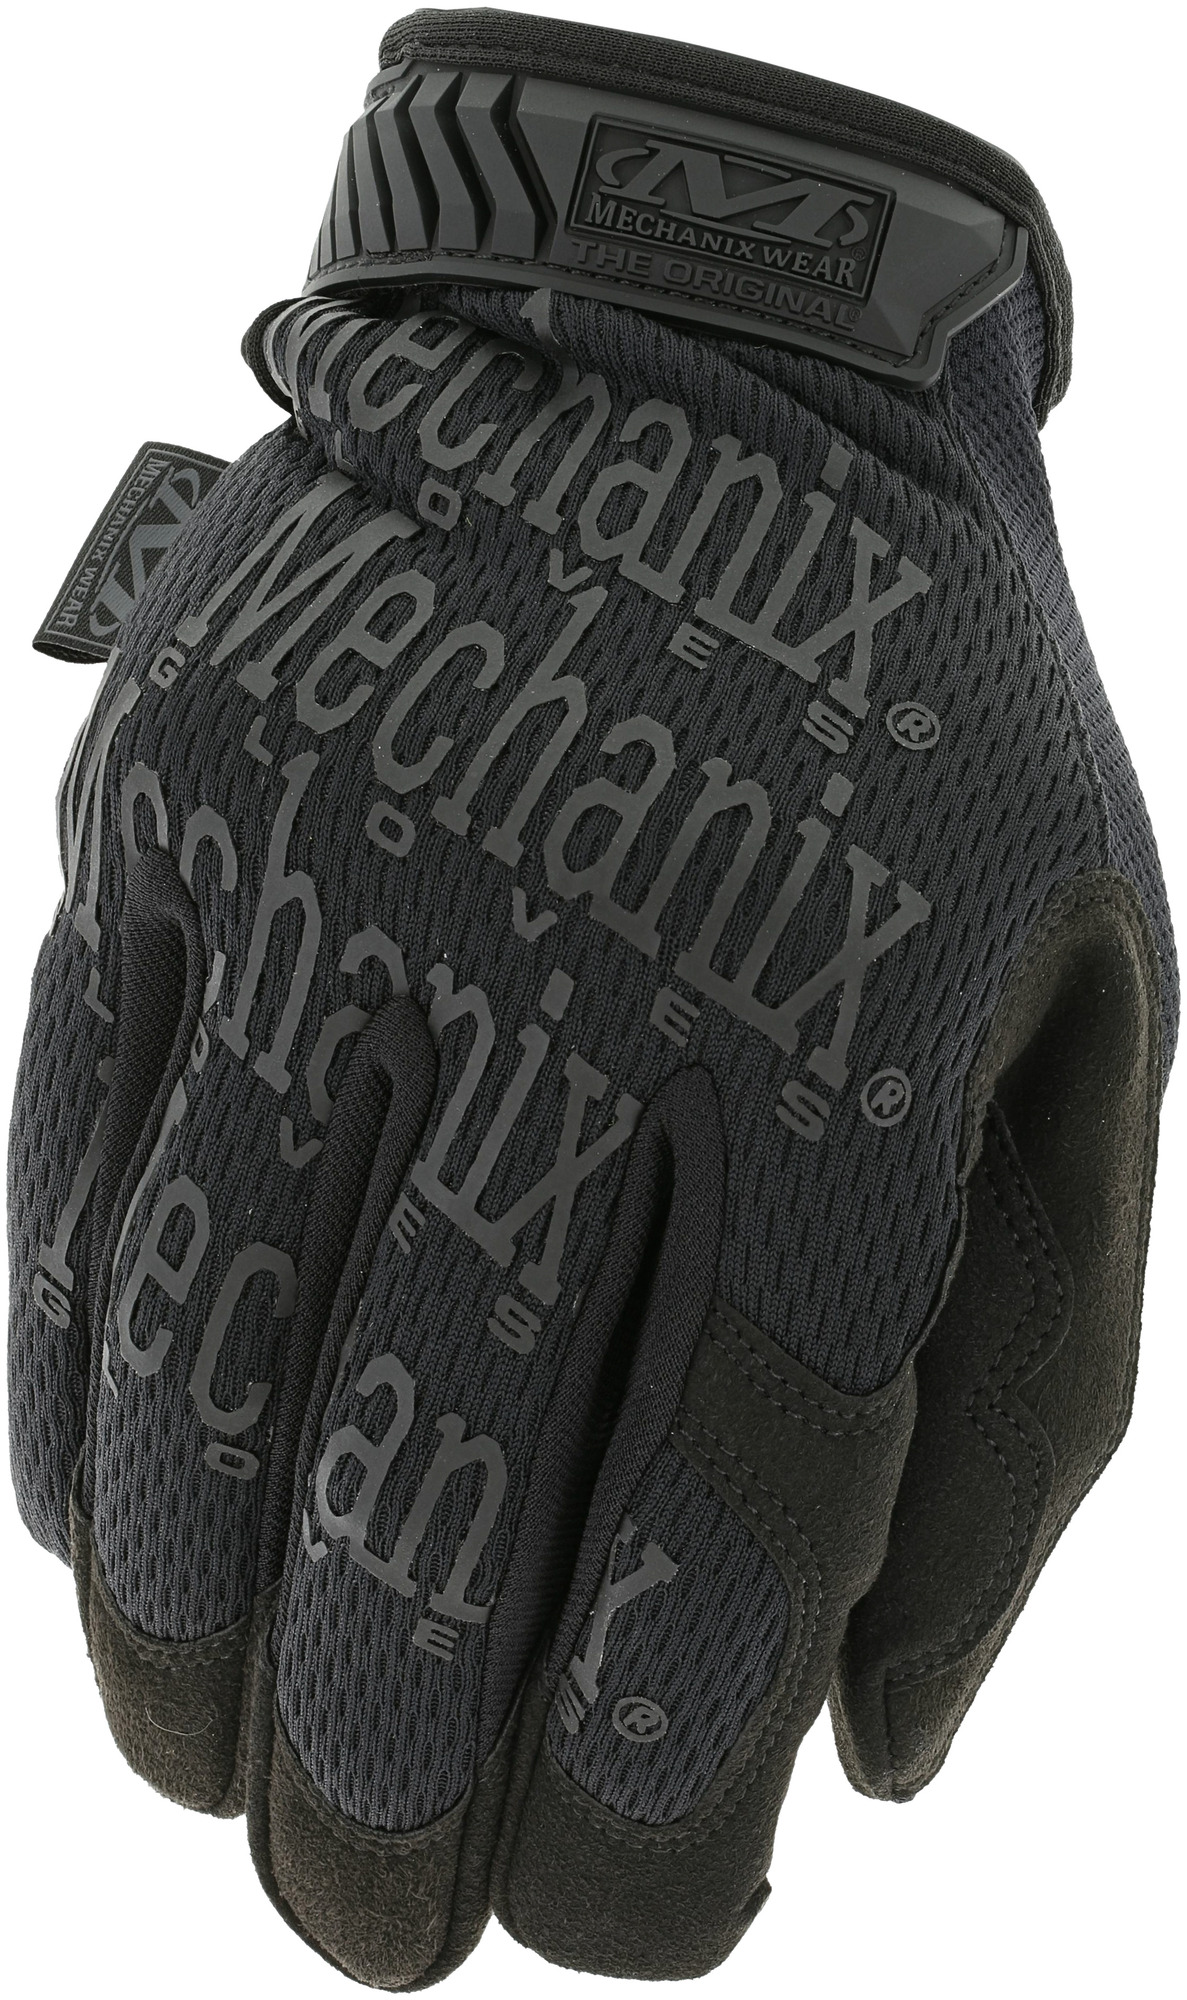 MECHANIX rukavice so syntetickou kožou Original - Covert - čierne M/9